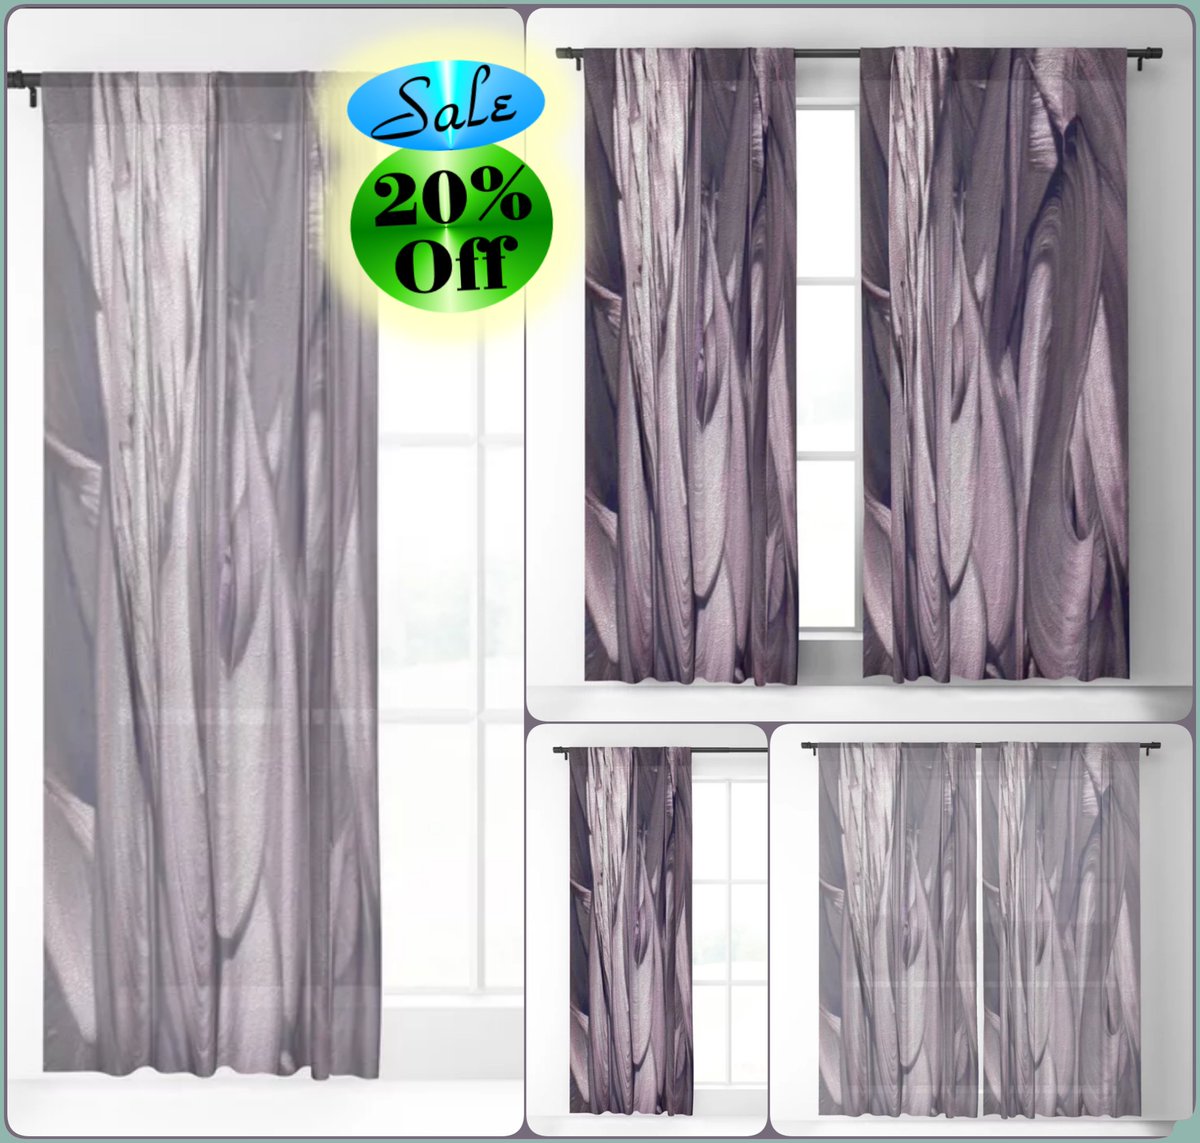 *Sale 20% Off*
Epona -Celtic Sheer & Blackout Curtain~by Art Falaxy~
~Exquisite Decor~
#artfalaxy #art #curtains #drapes #homedecor #society6 #Society6max #swirls #accents #sheercurtains #blackoutcurtains #floorrugs

society6.com/product/epona-…

society6.com/product/epona-…